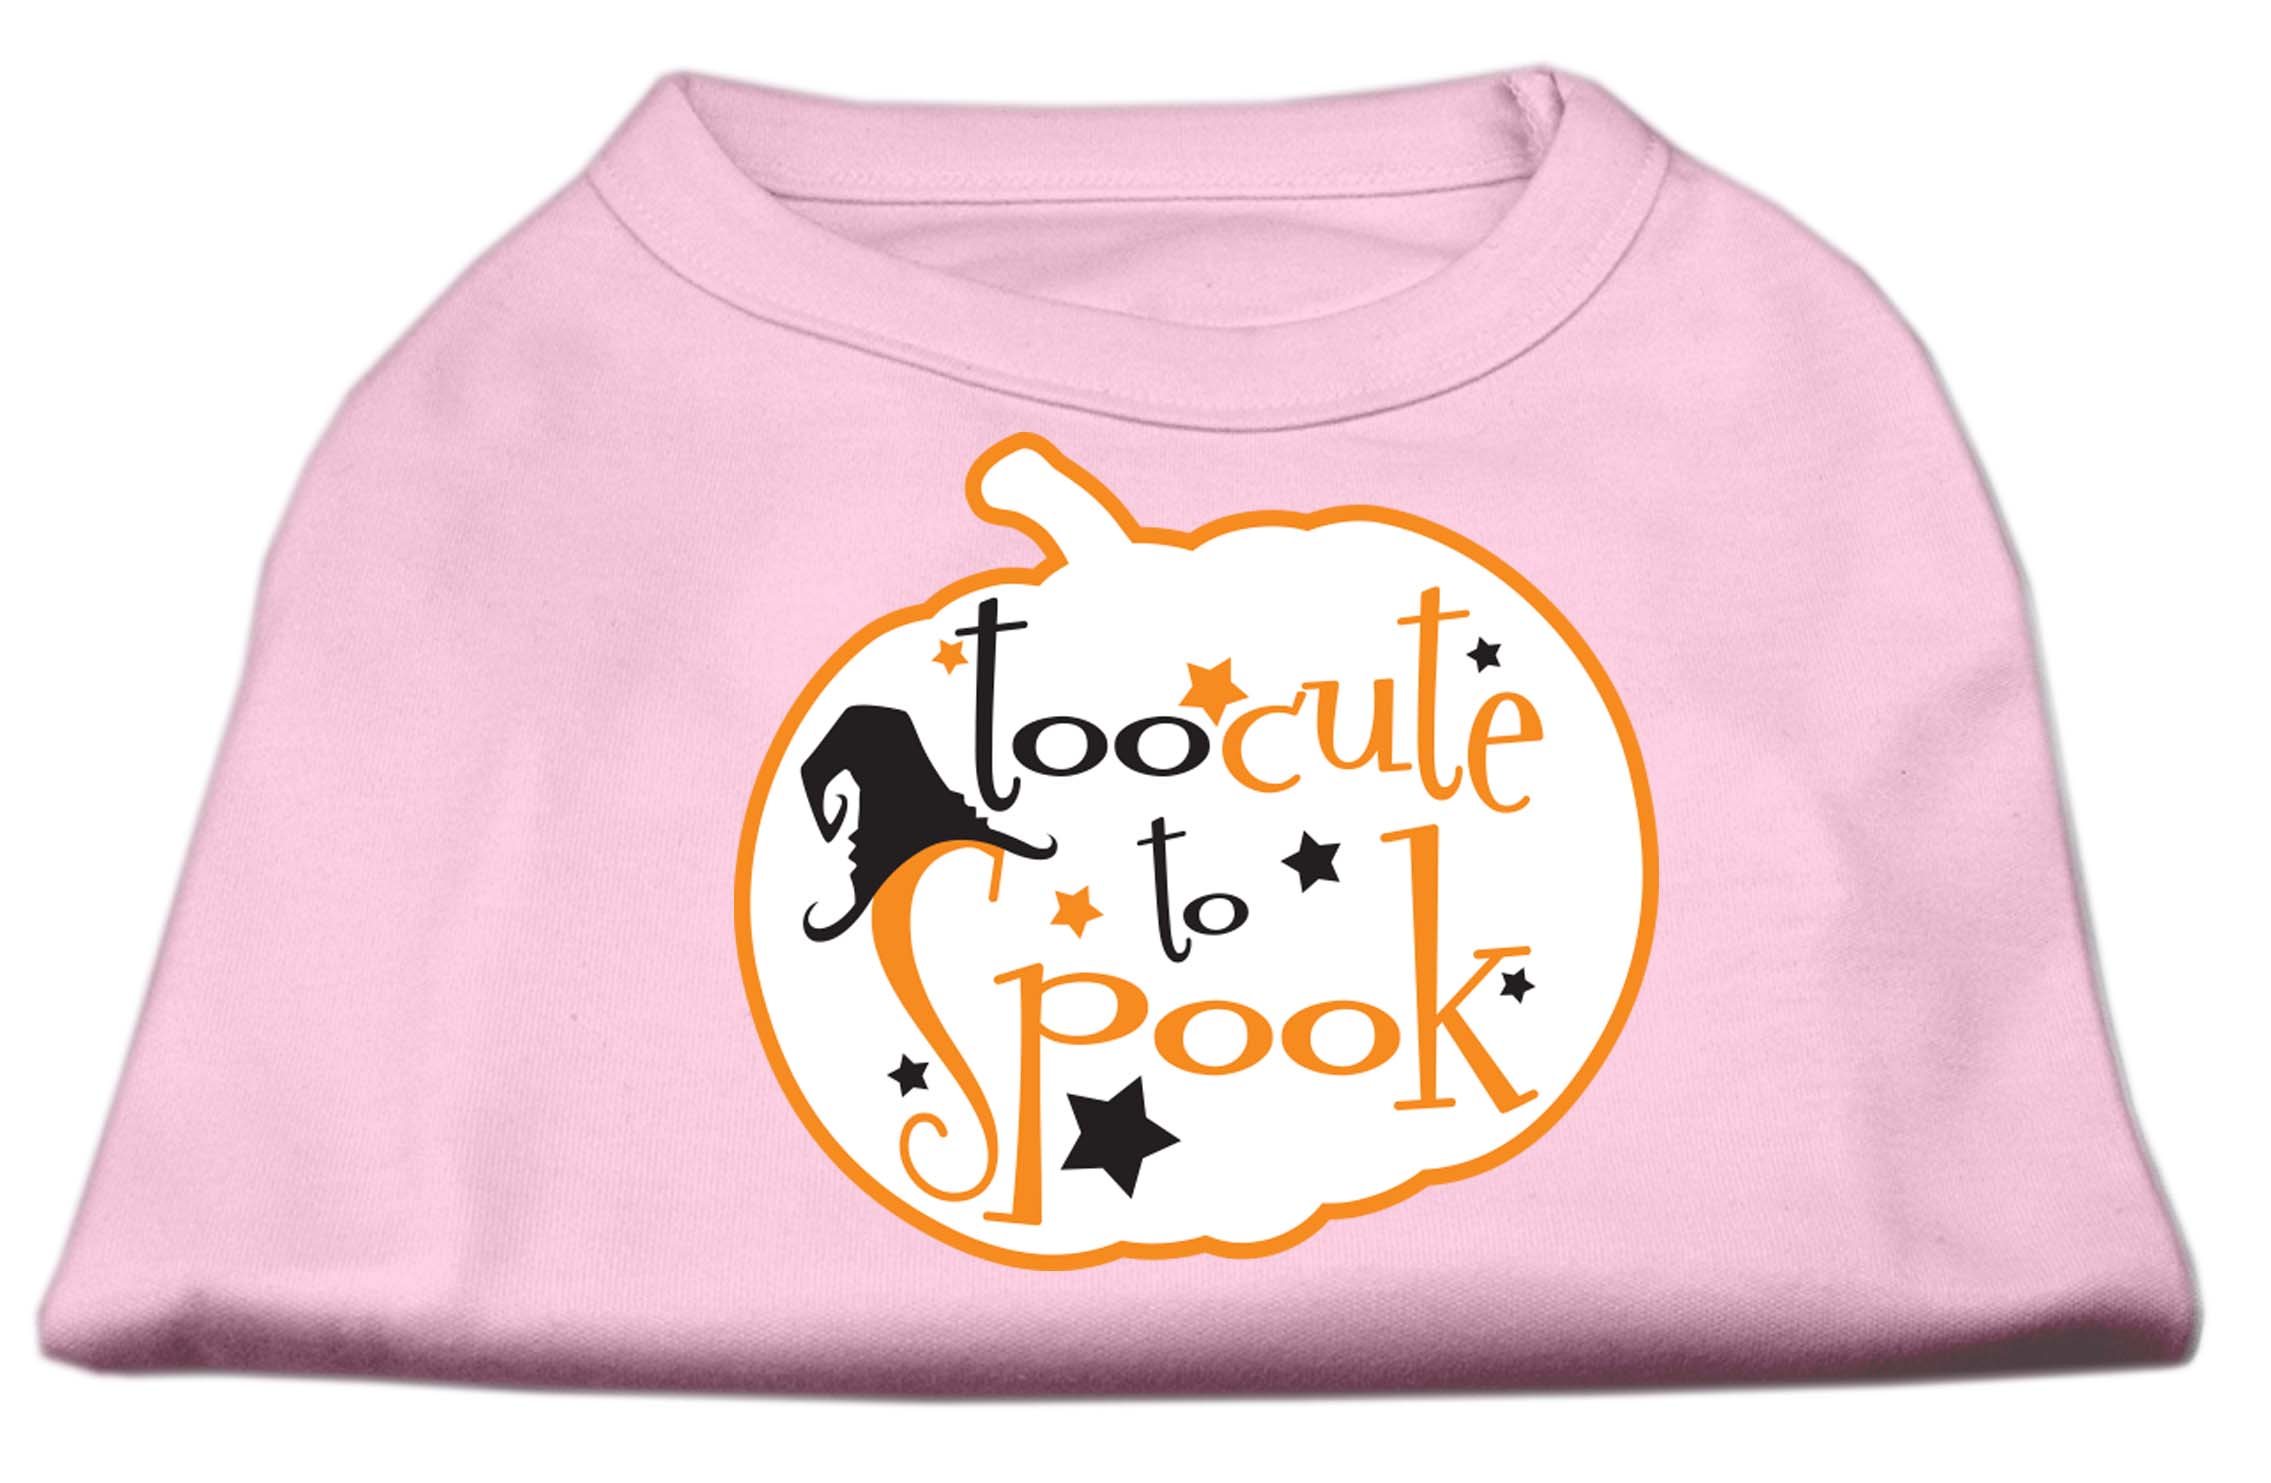 Too Cute to Spook Screen Print Dog Shirt Light Pink Lg